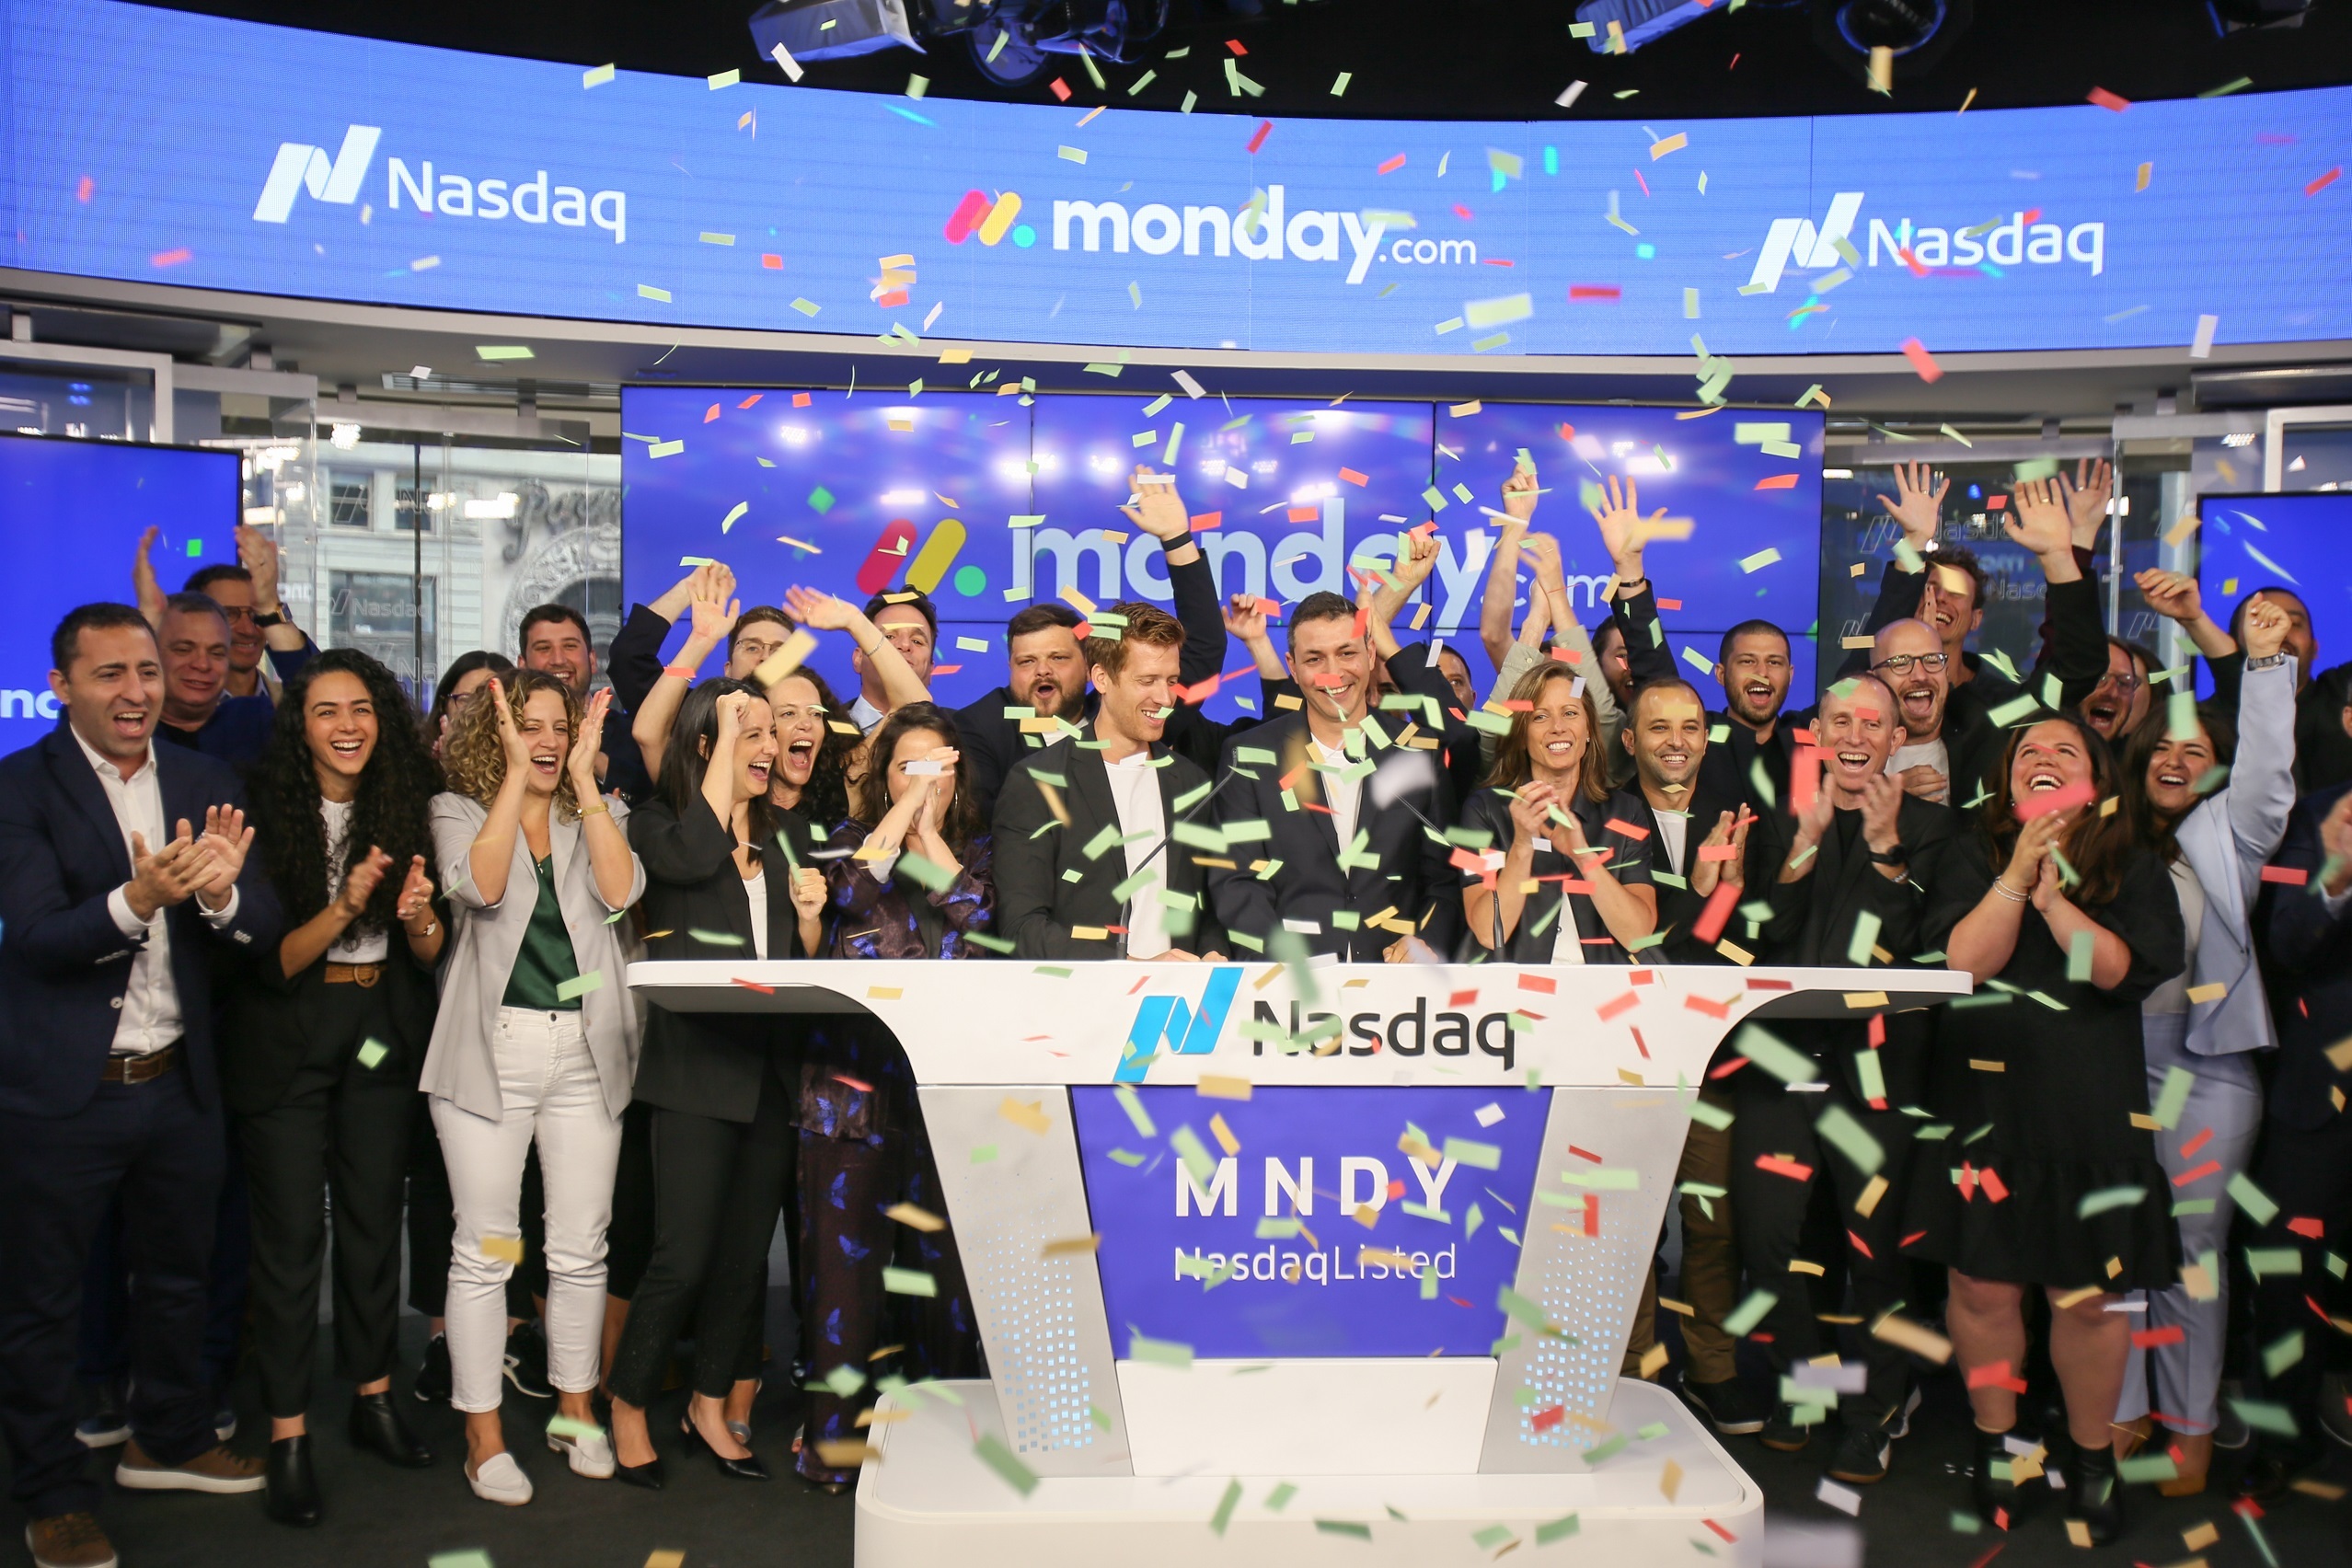 monday.com managing team open Nasdaq trade following Thursday's IPO Photo: Nasdaq